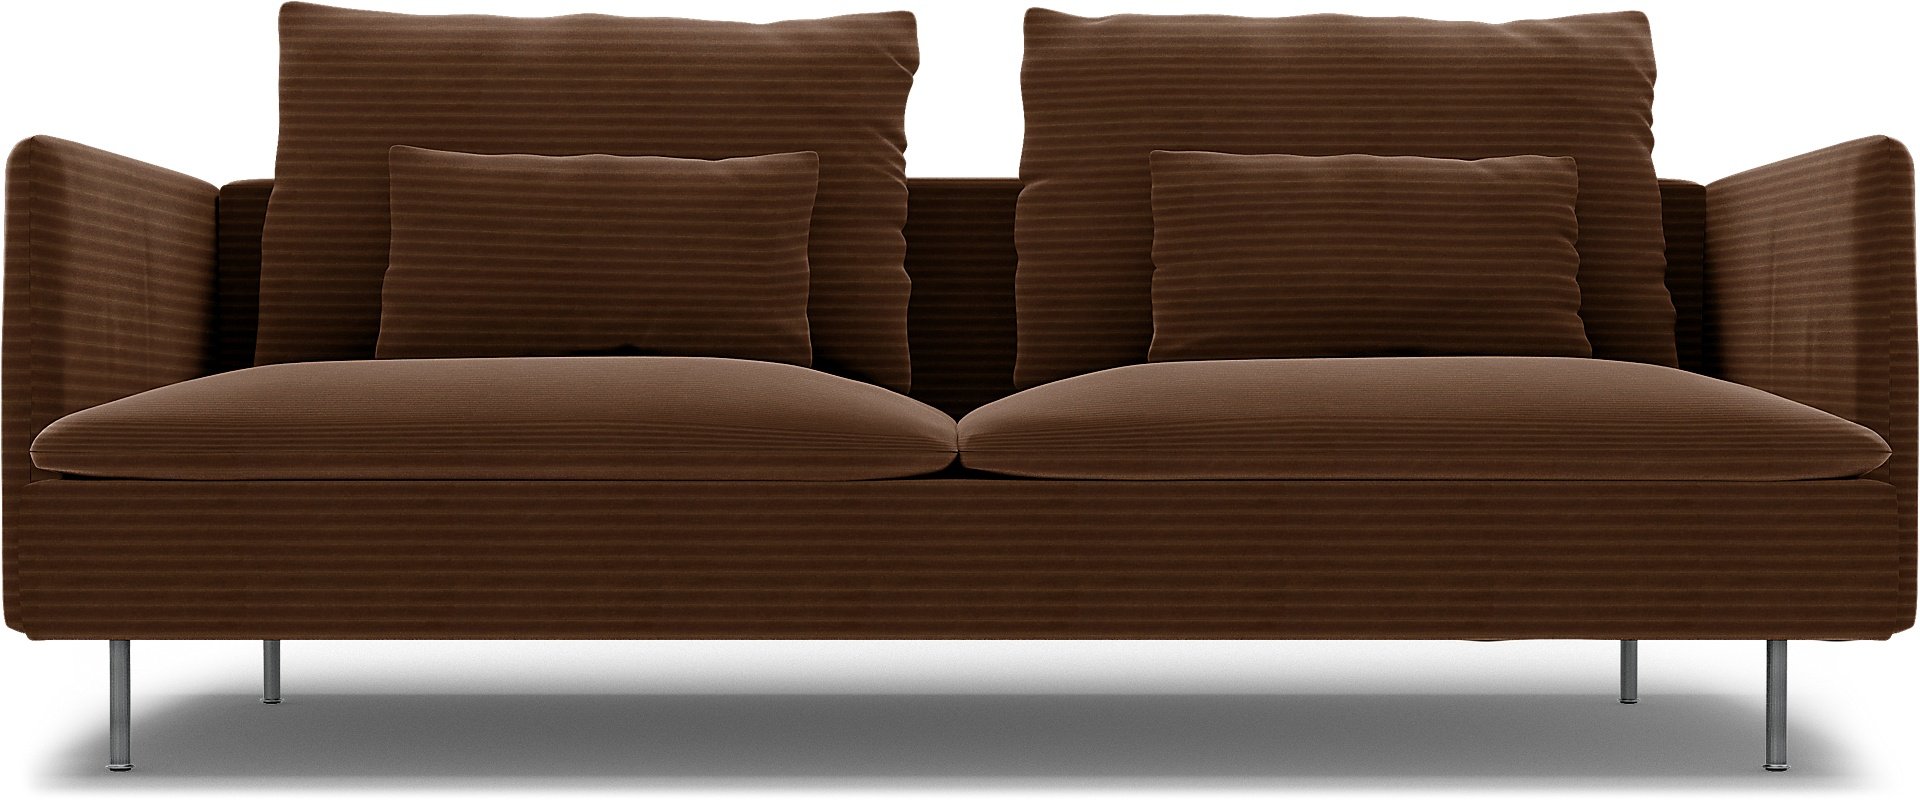 IKEA - Soderhamn Sofa Bed Cover, Chocolate Brown, Corduroy - Bemz